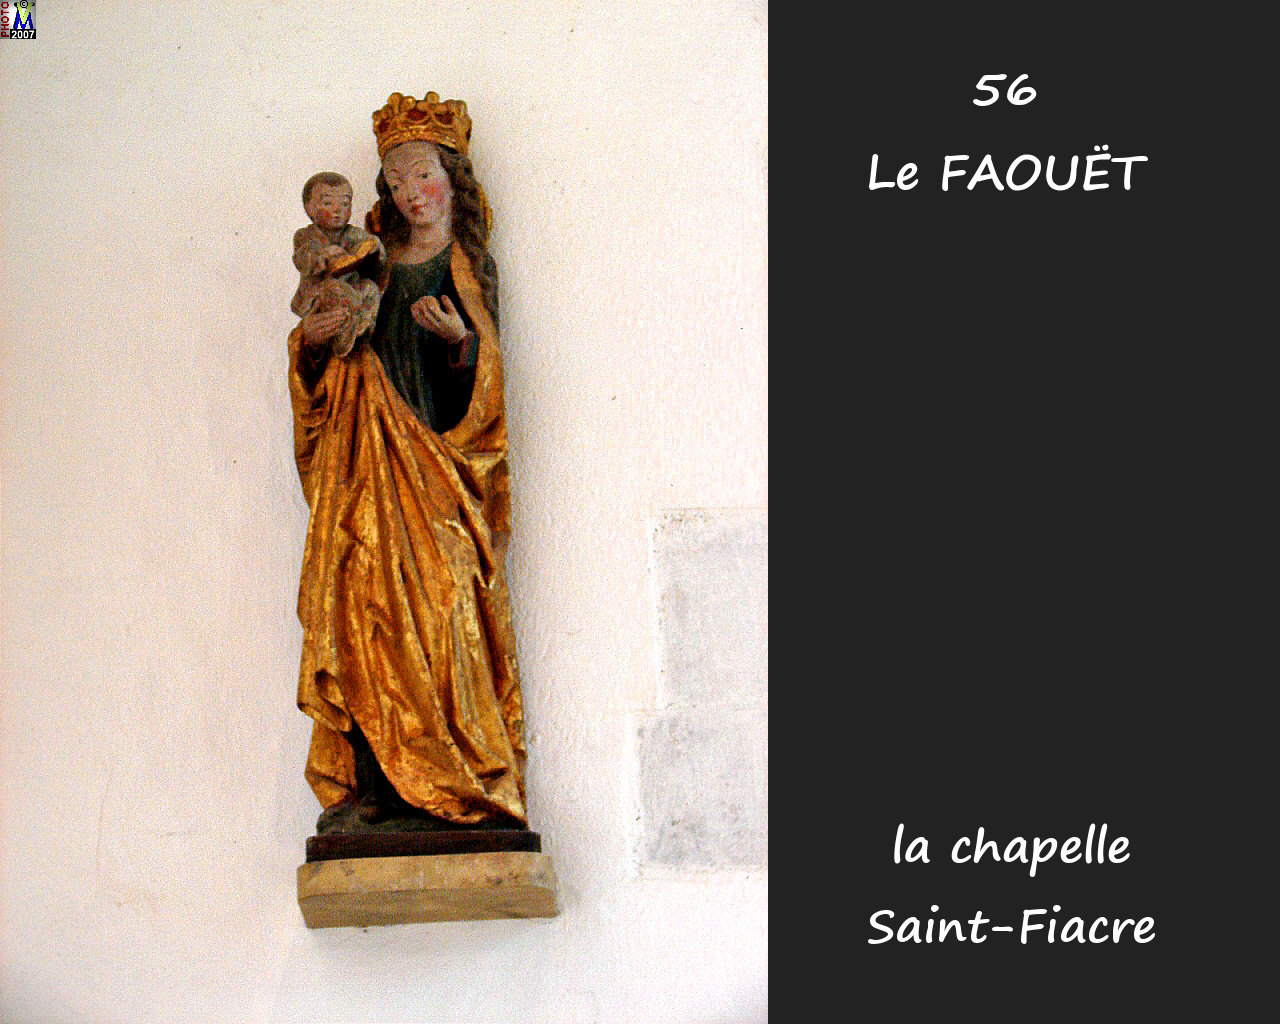 56FAOUET_chapelle-fiacre_332.jpg